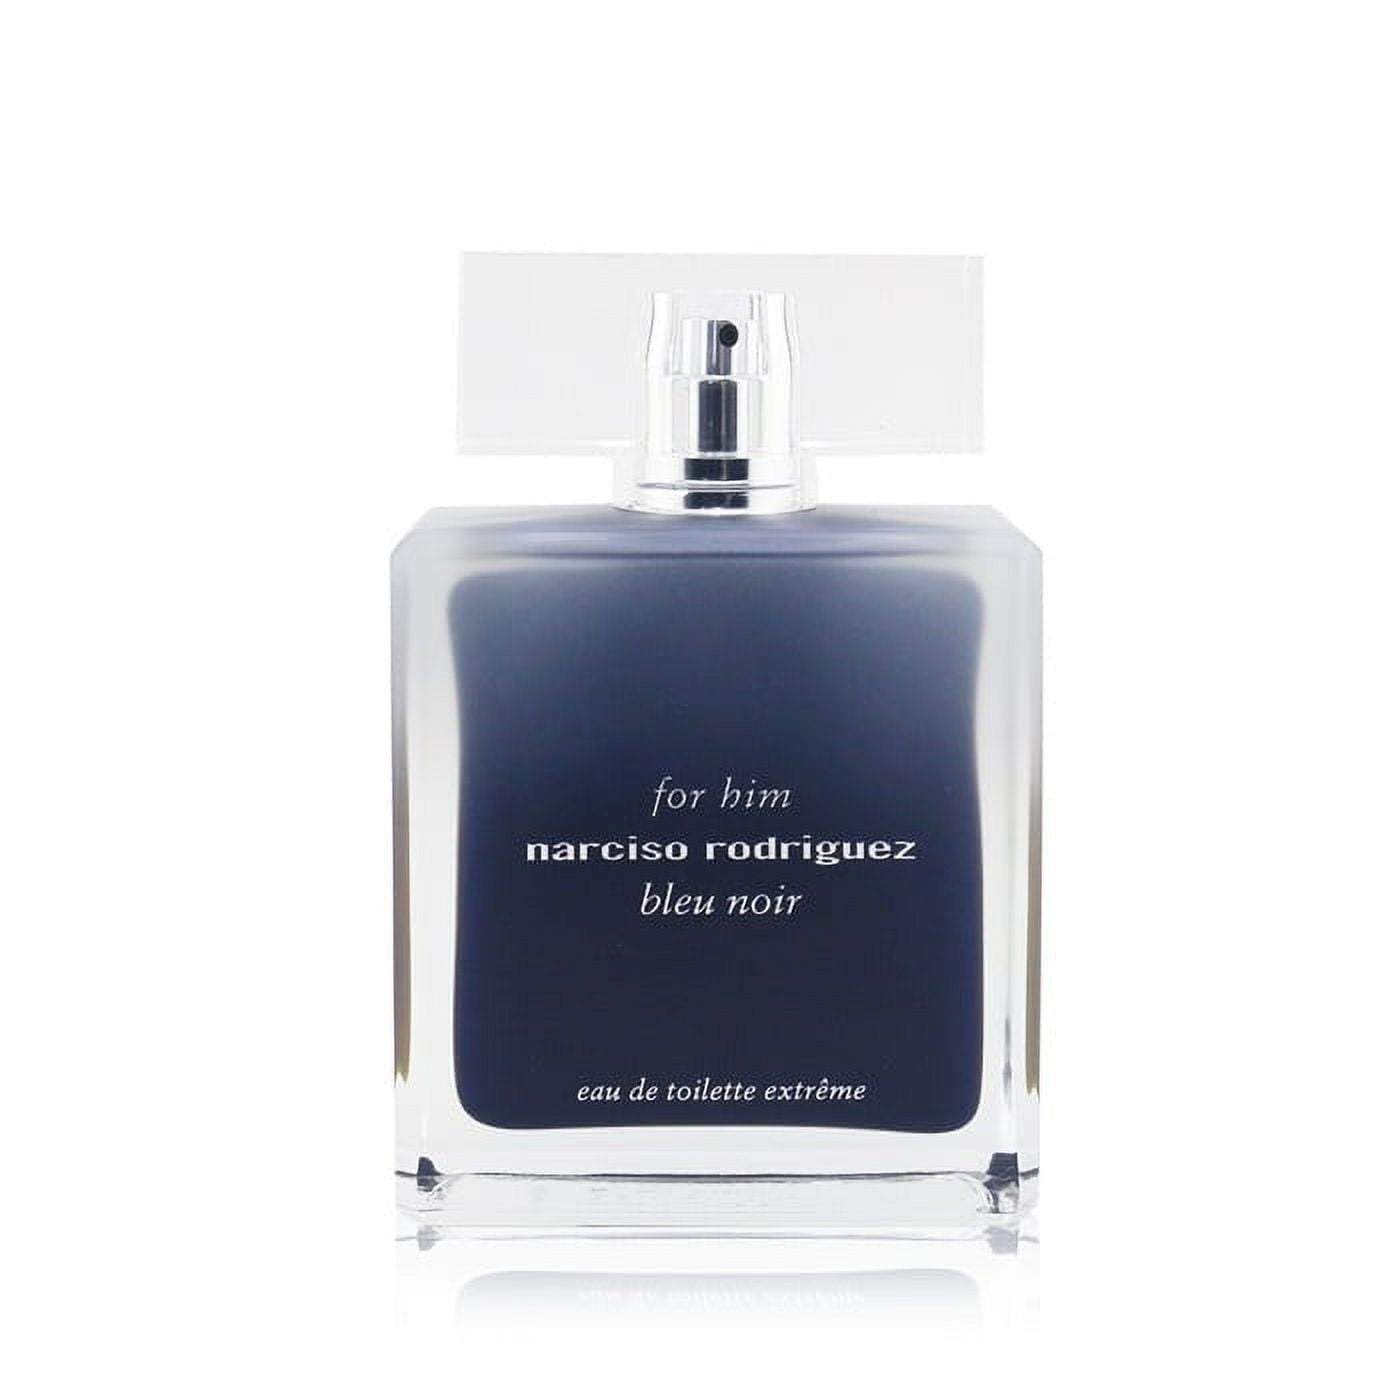 narciso rodriguez for him bleu noir perfume